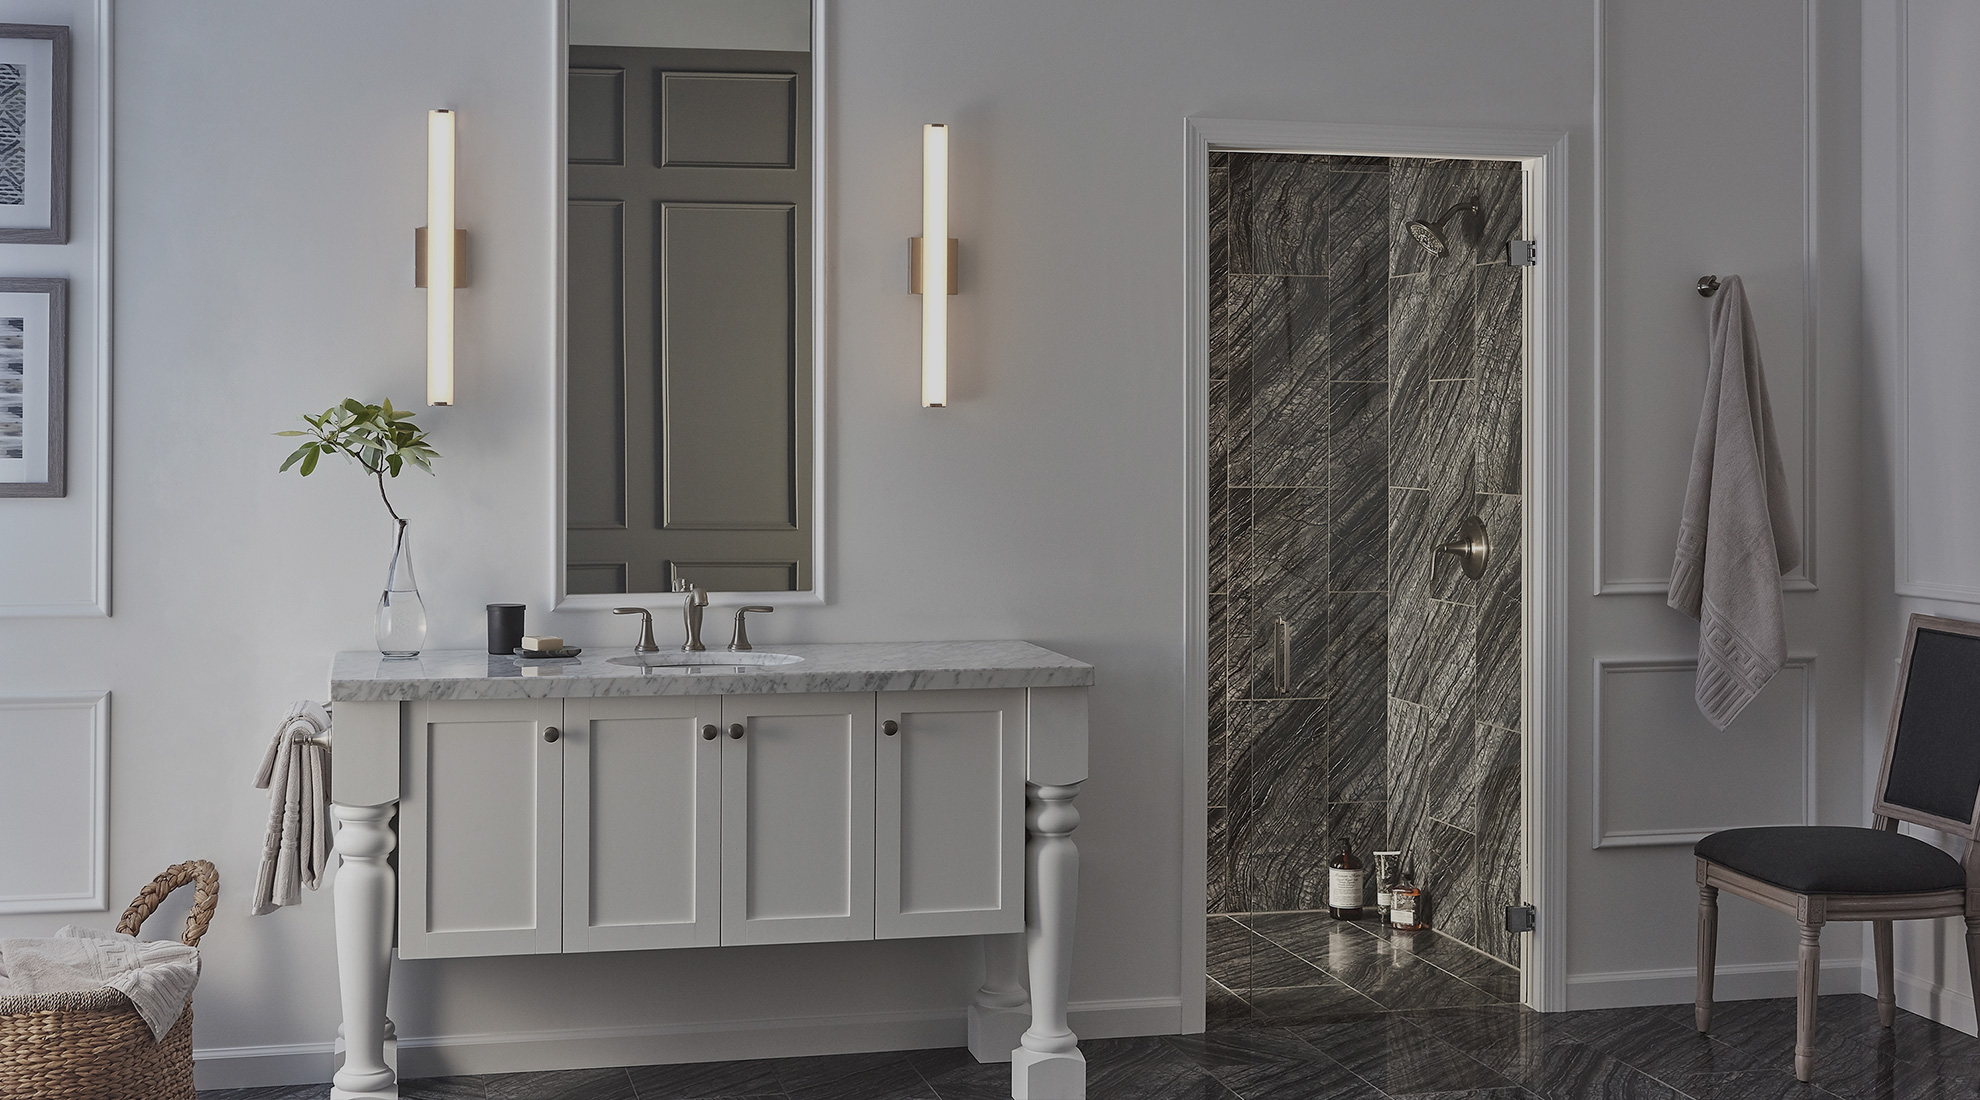 Make your bathroom comfortable through organization and cool bathroom lighting